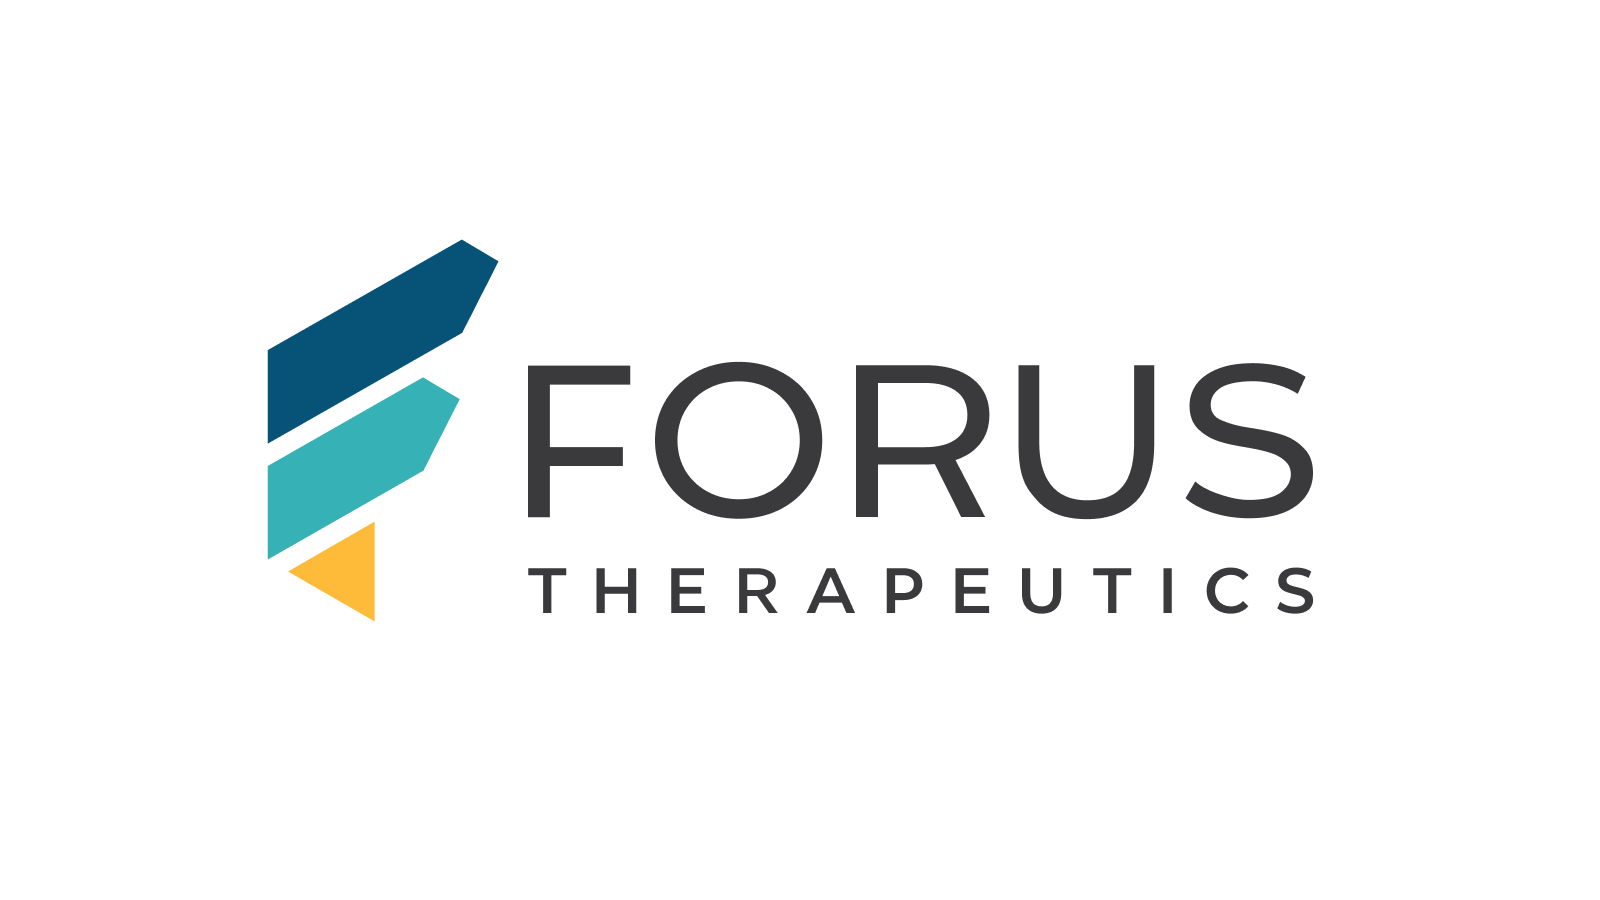 forus therapeutics logo